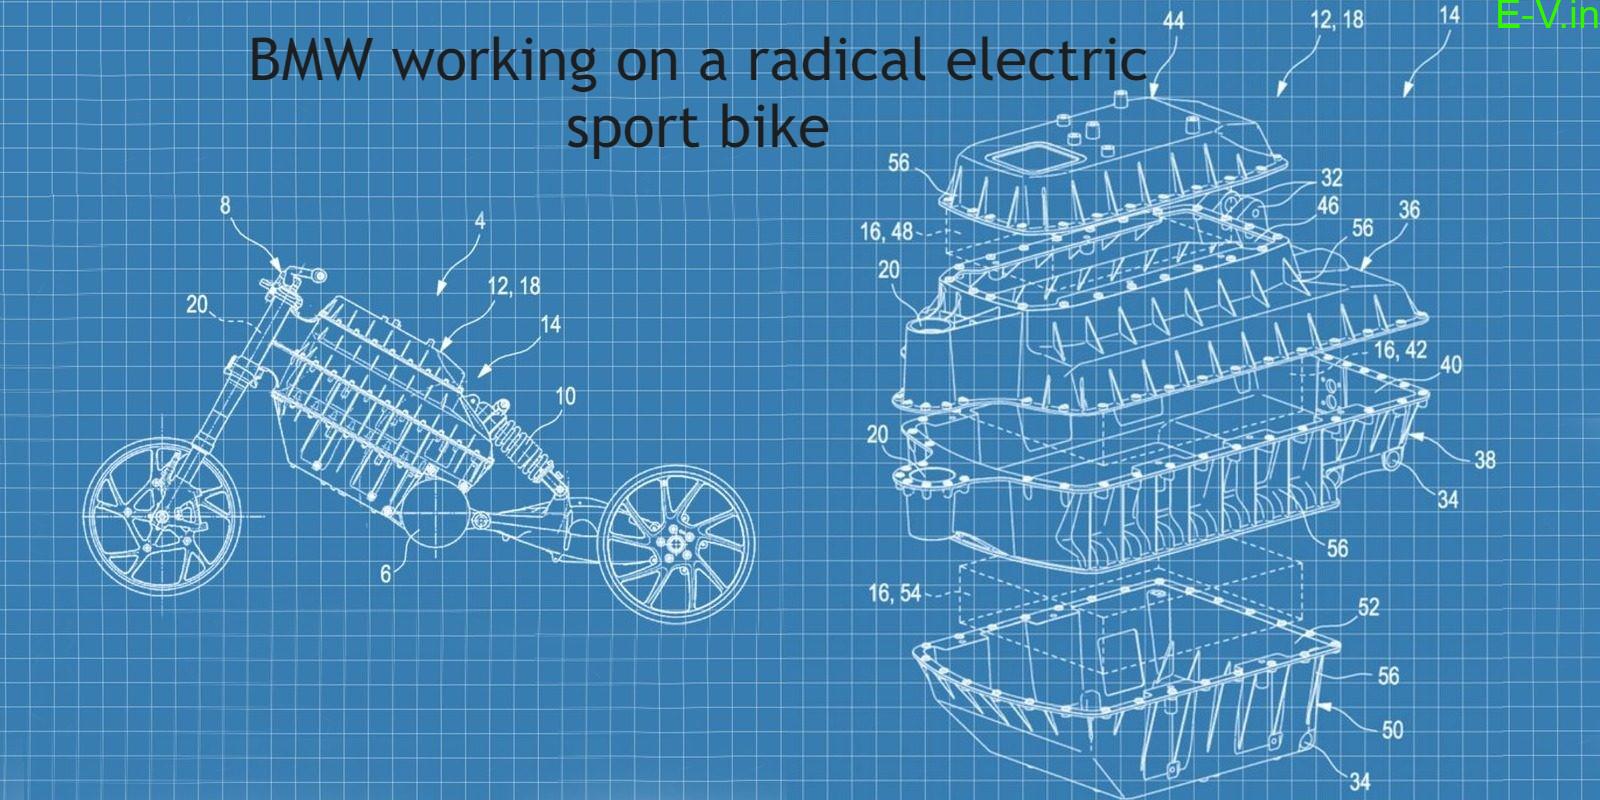 BMW working on a radical electric sport bike